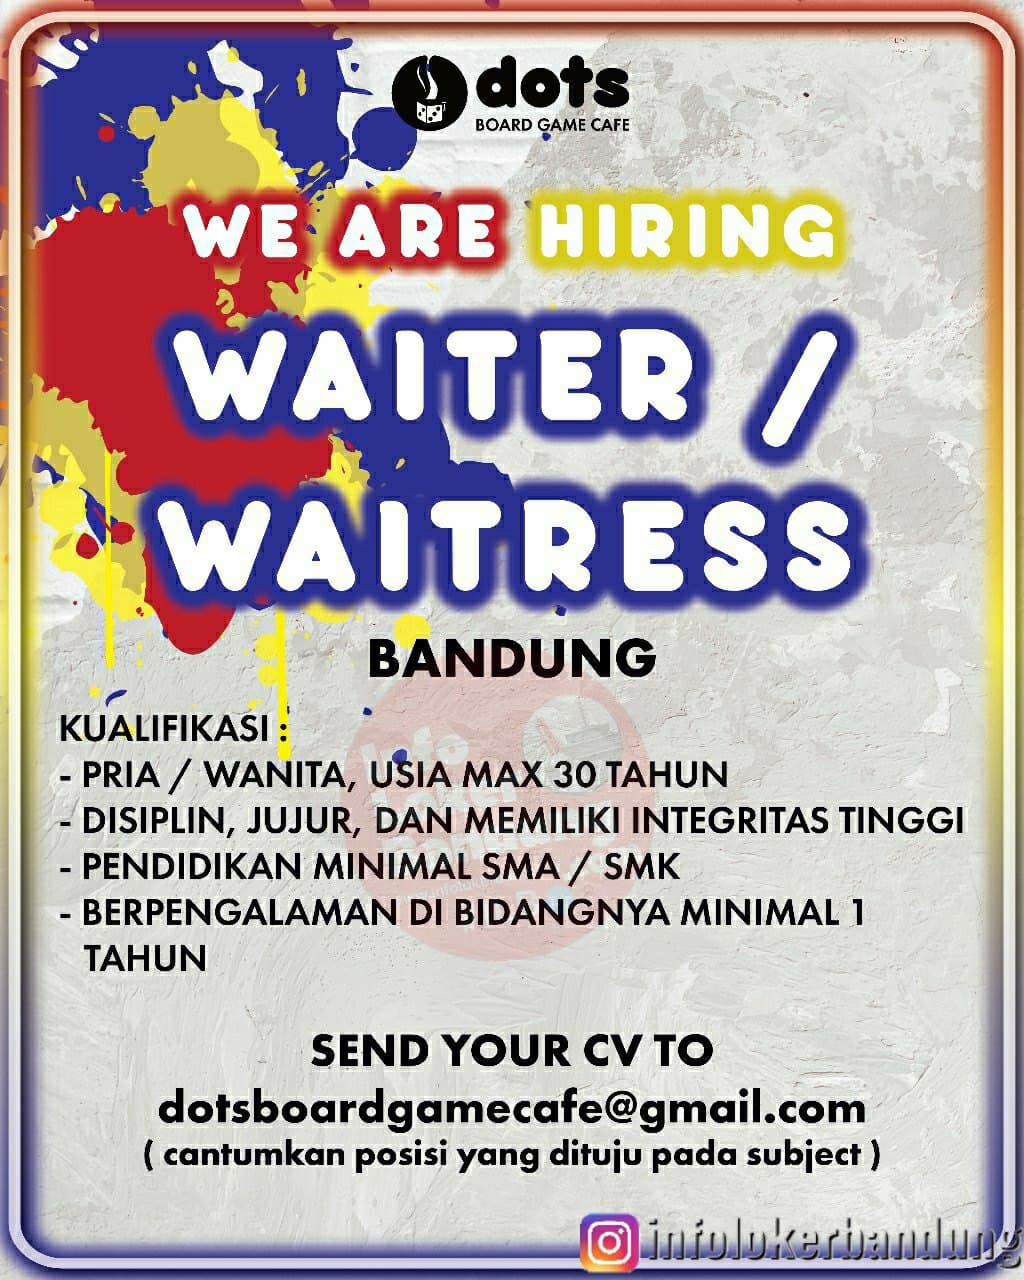 Lowongan Kerja Waiter Waitress Dots Board Game Cafe Bandung Januari 2021 Info Loker Bandung 2021